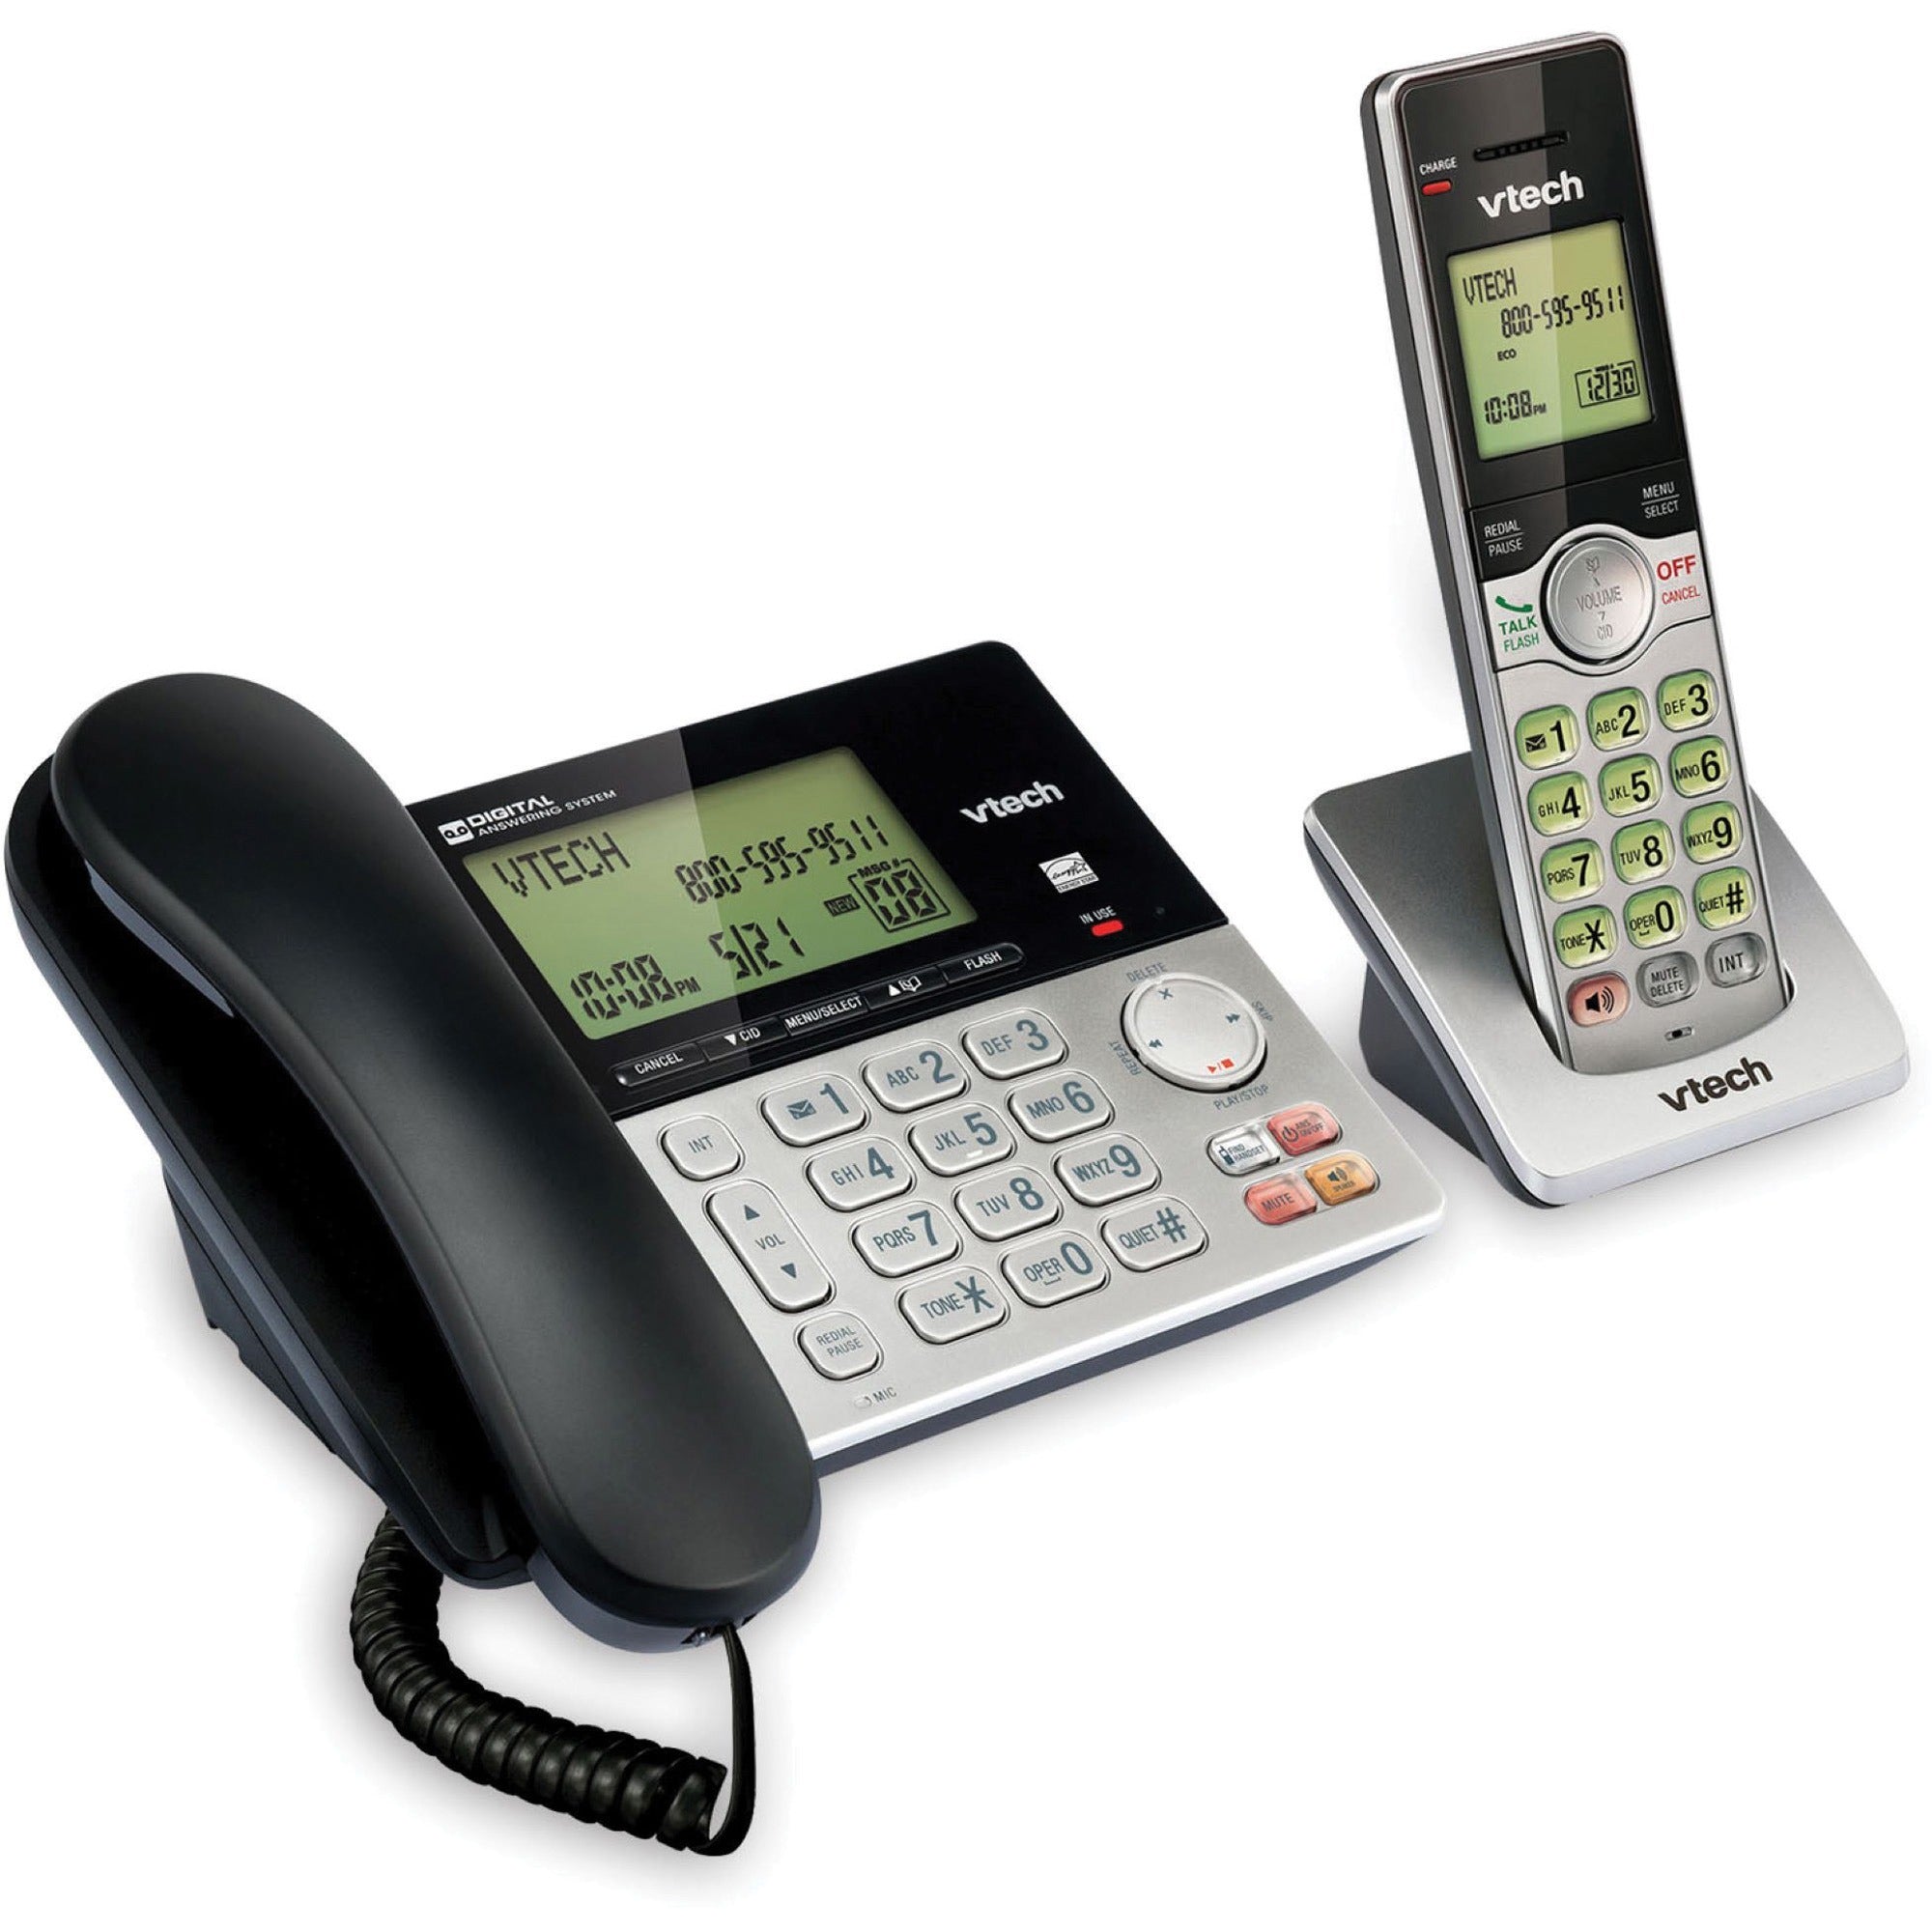 vtech-cs6949-dect-60-standard-phone-black-silver-cordless-corded-1-x-phone-line-speakerphone-answering-machine-hearing-aid-compatible_vtecs6949 - 3